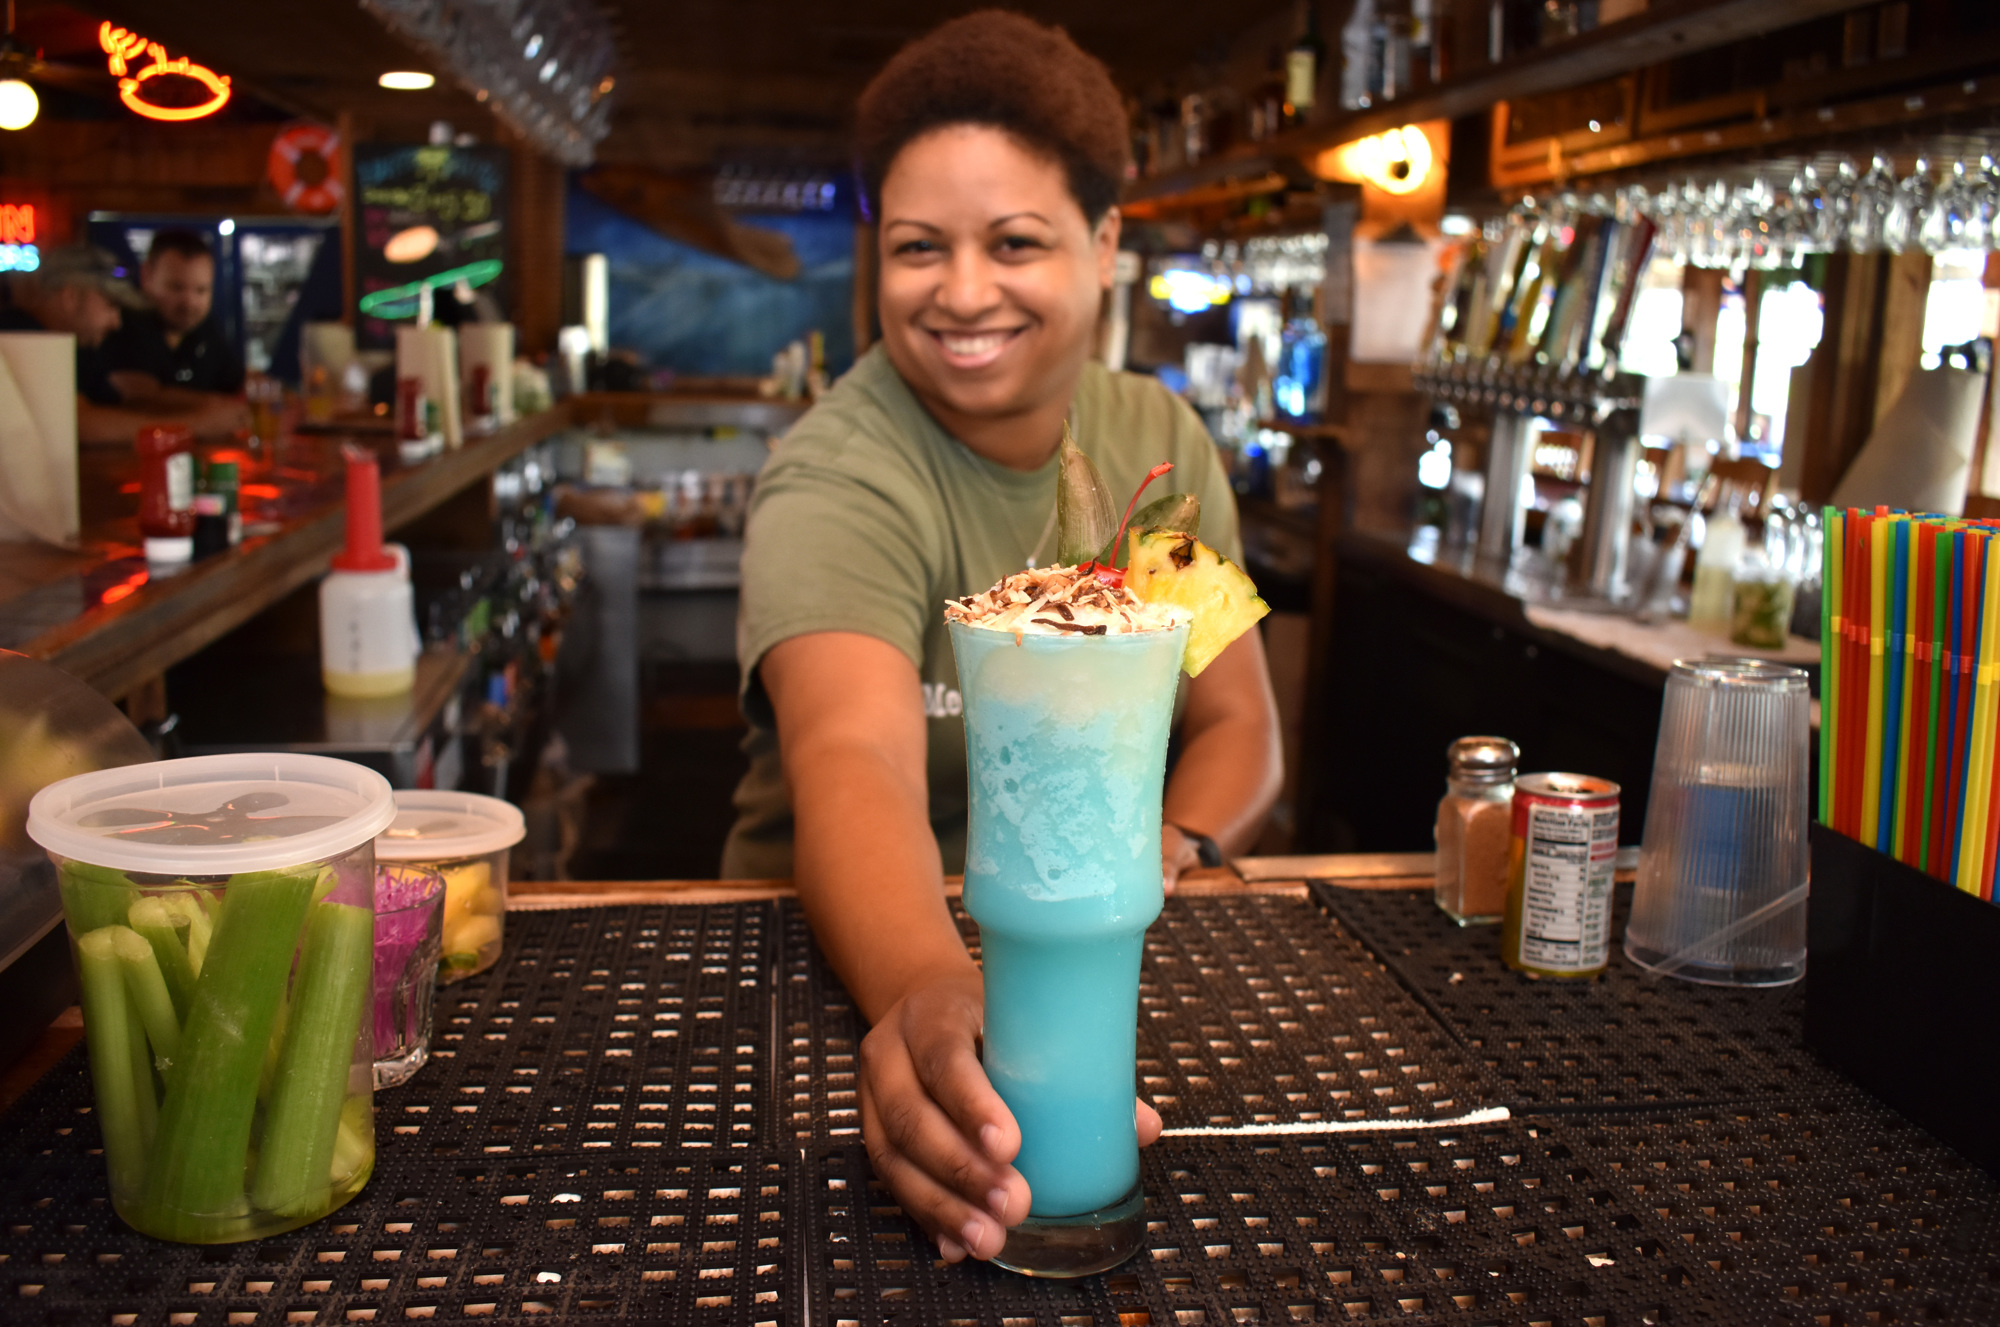 Phillippi Creek Village Restaurant & Oyster Bar's veteran bartender Jasmine Stanco serves a Caribbean Coolada. Photo by Niki Kottmann.